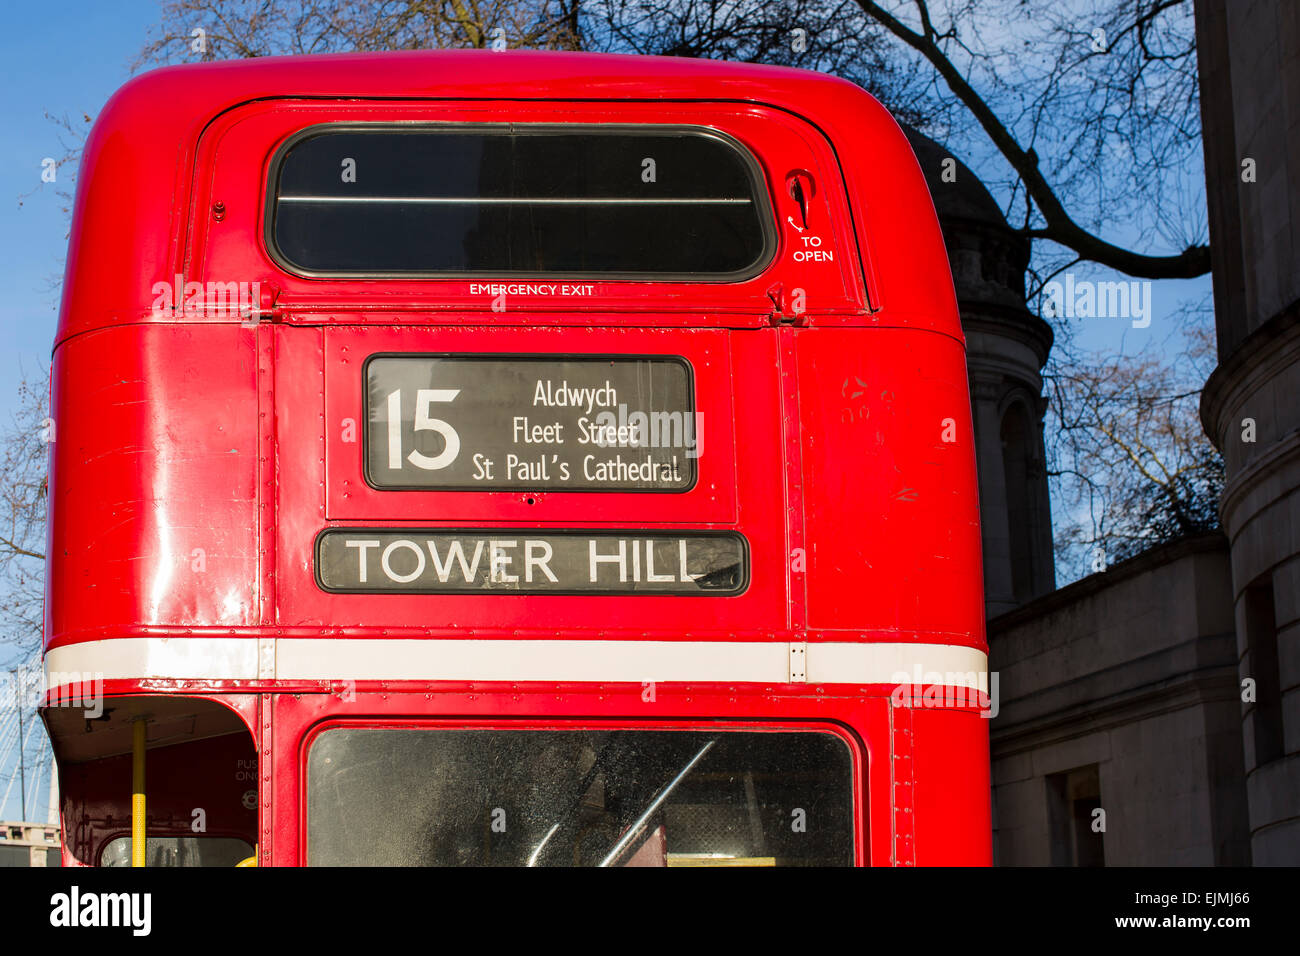 Vintage red double-decker bus, London Stock Photo